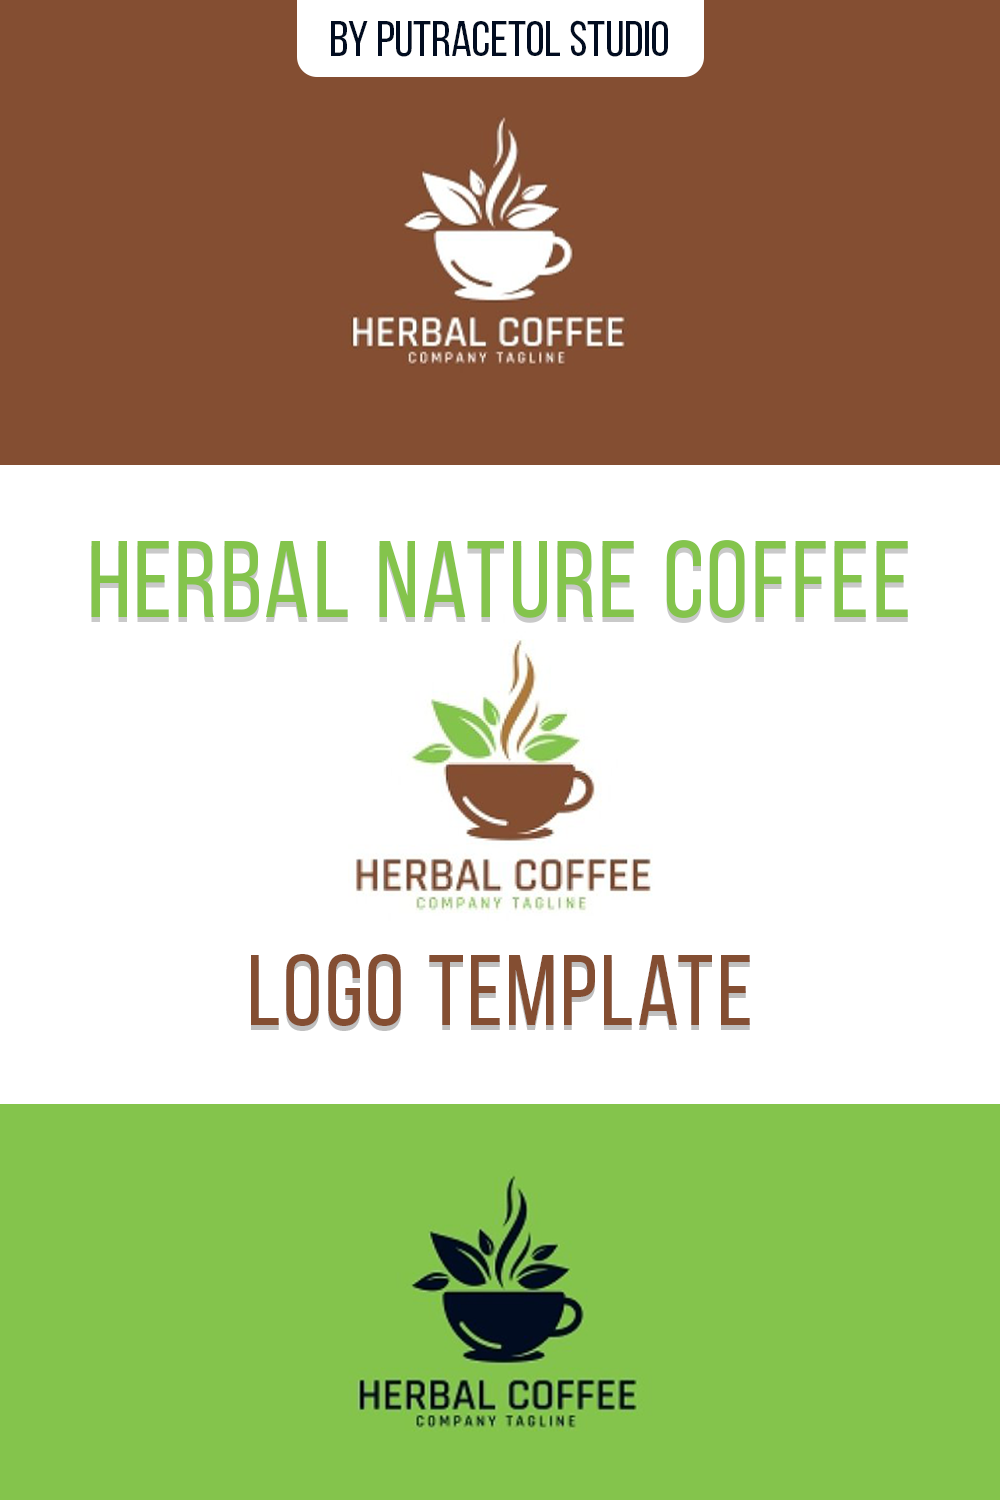 Three options logos of coffee and tea.